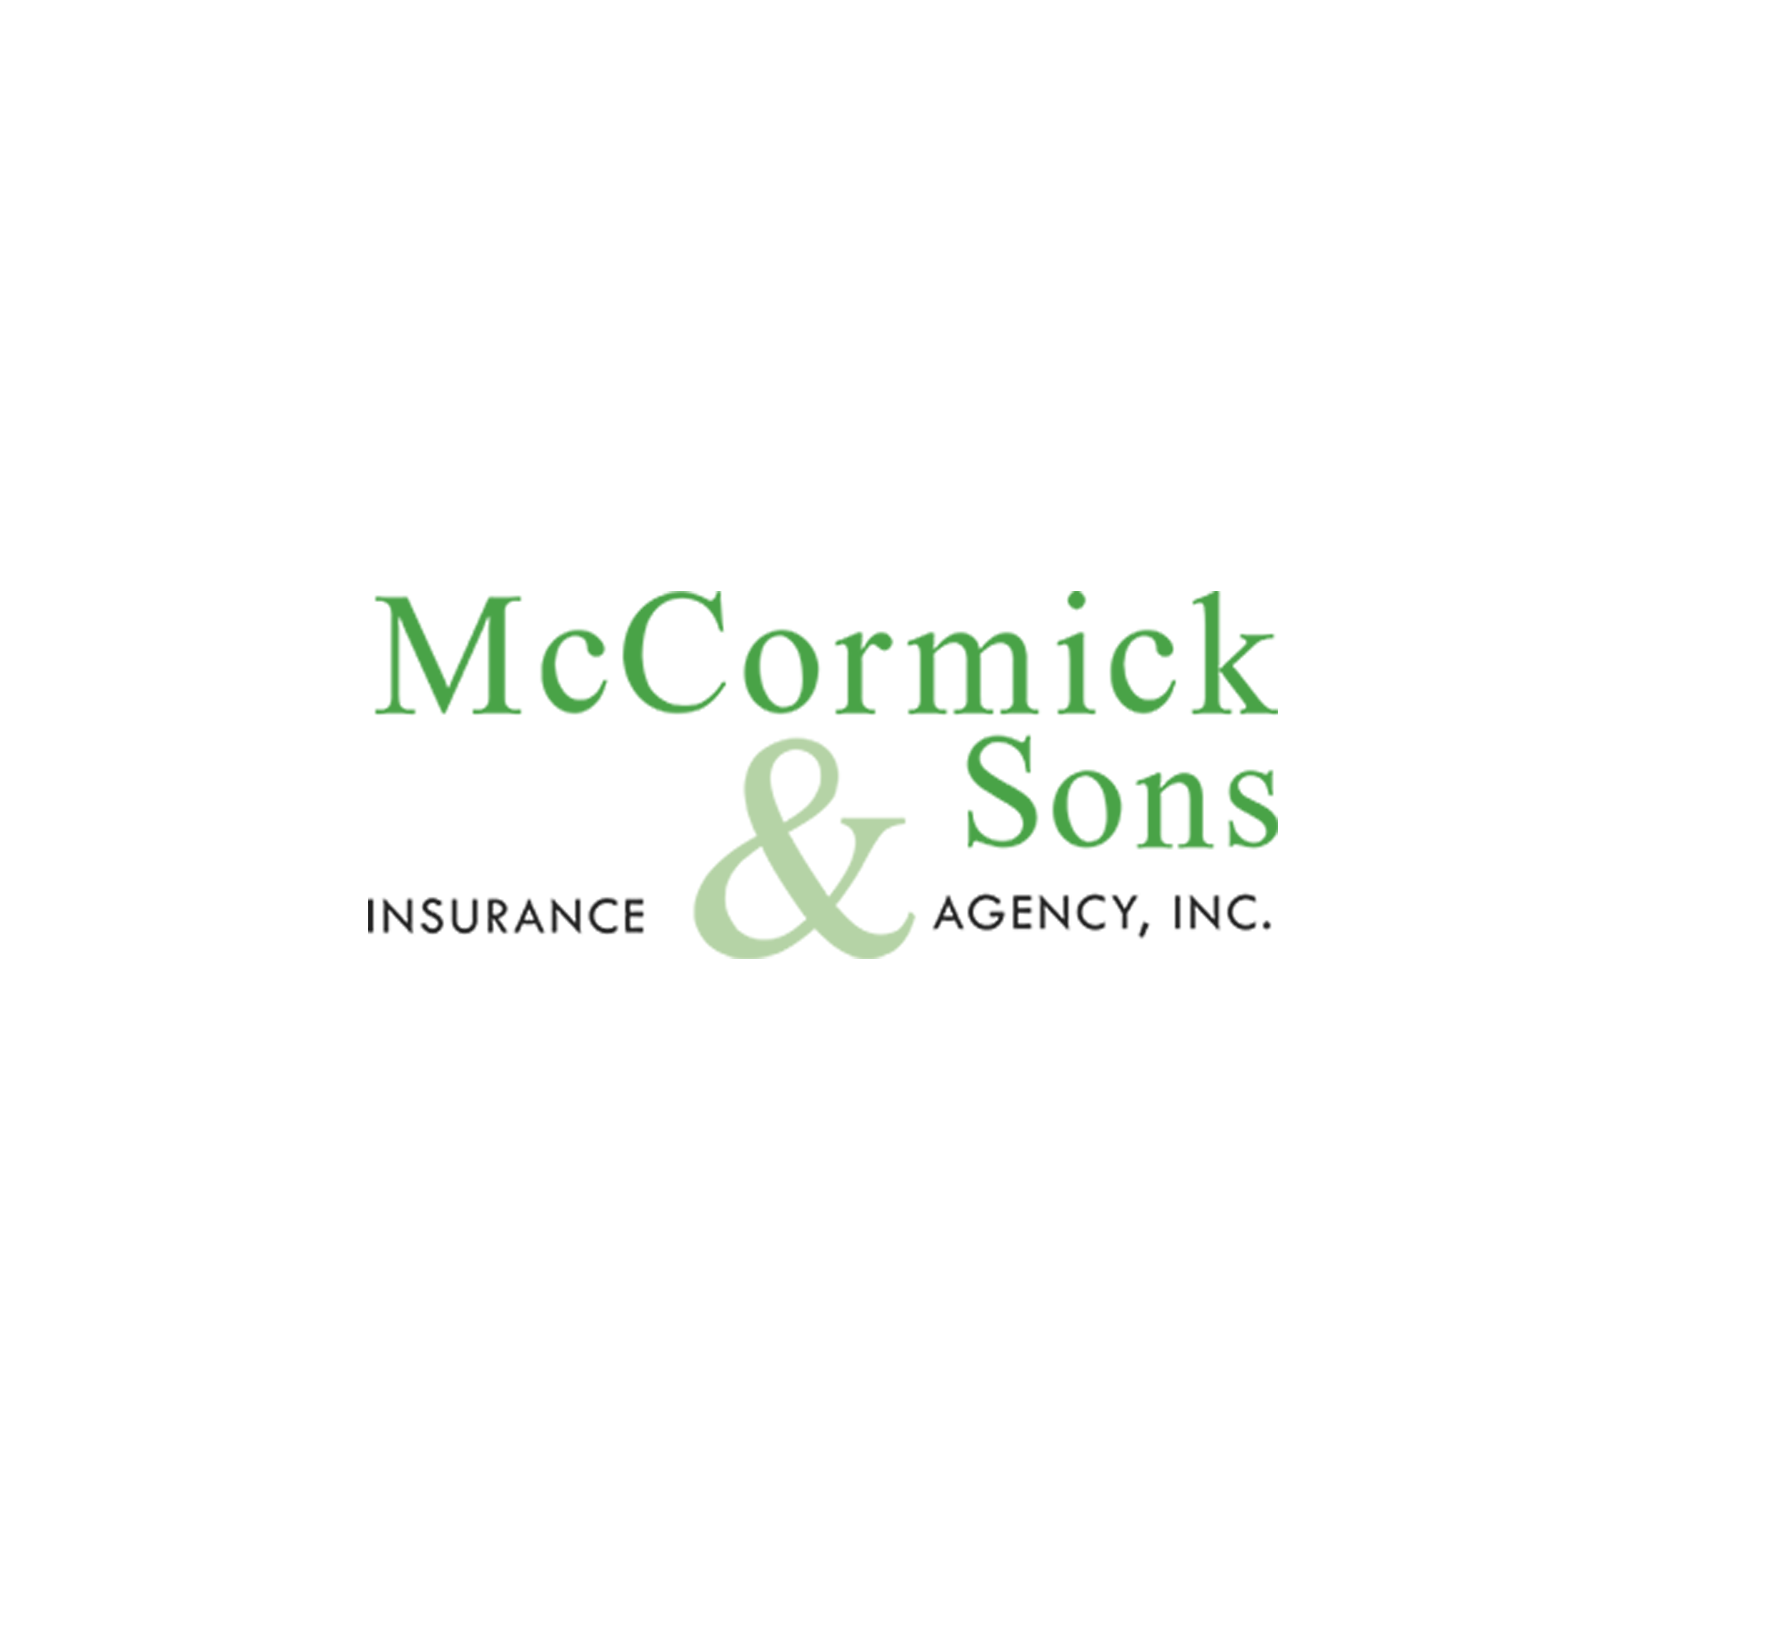 McCormick & Sons Insurance